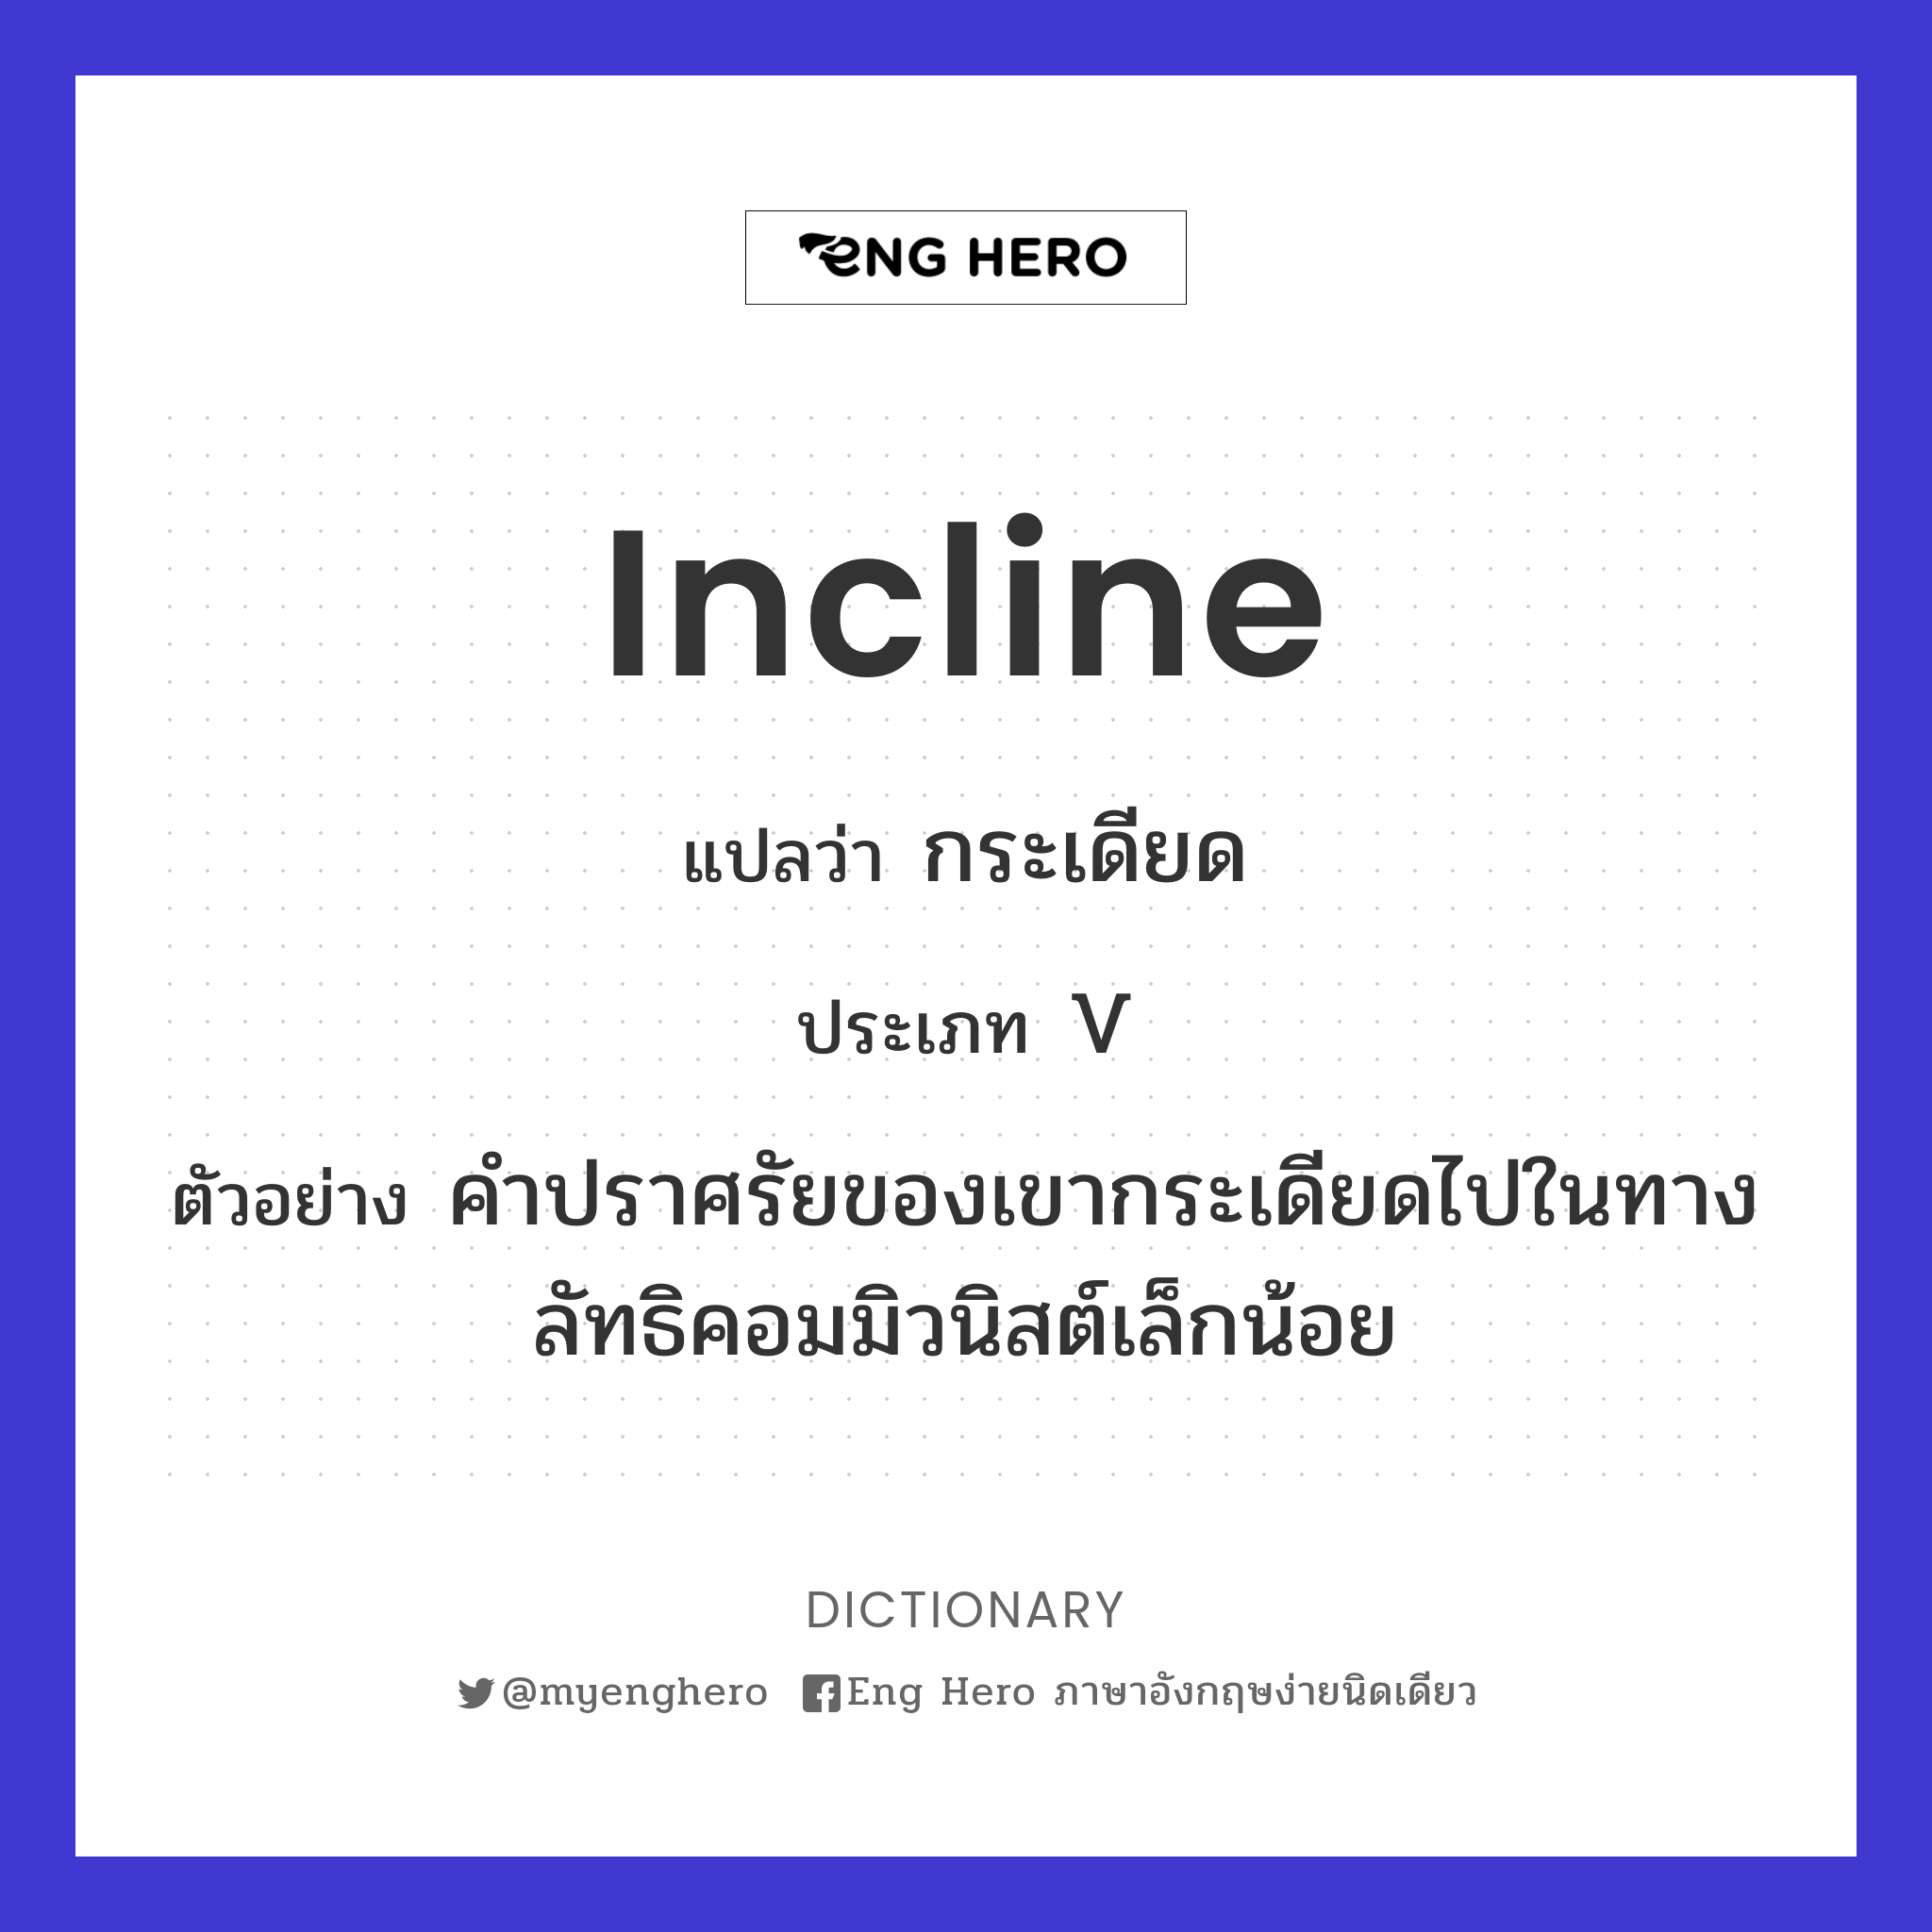 incline